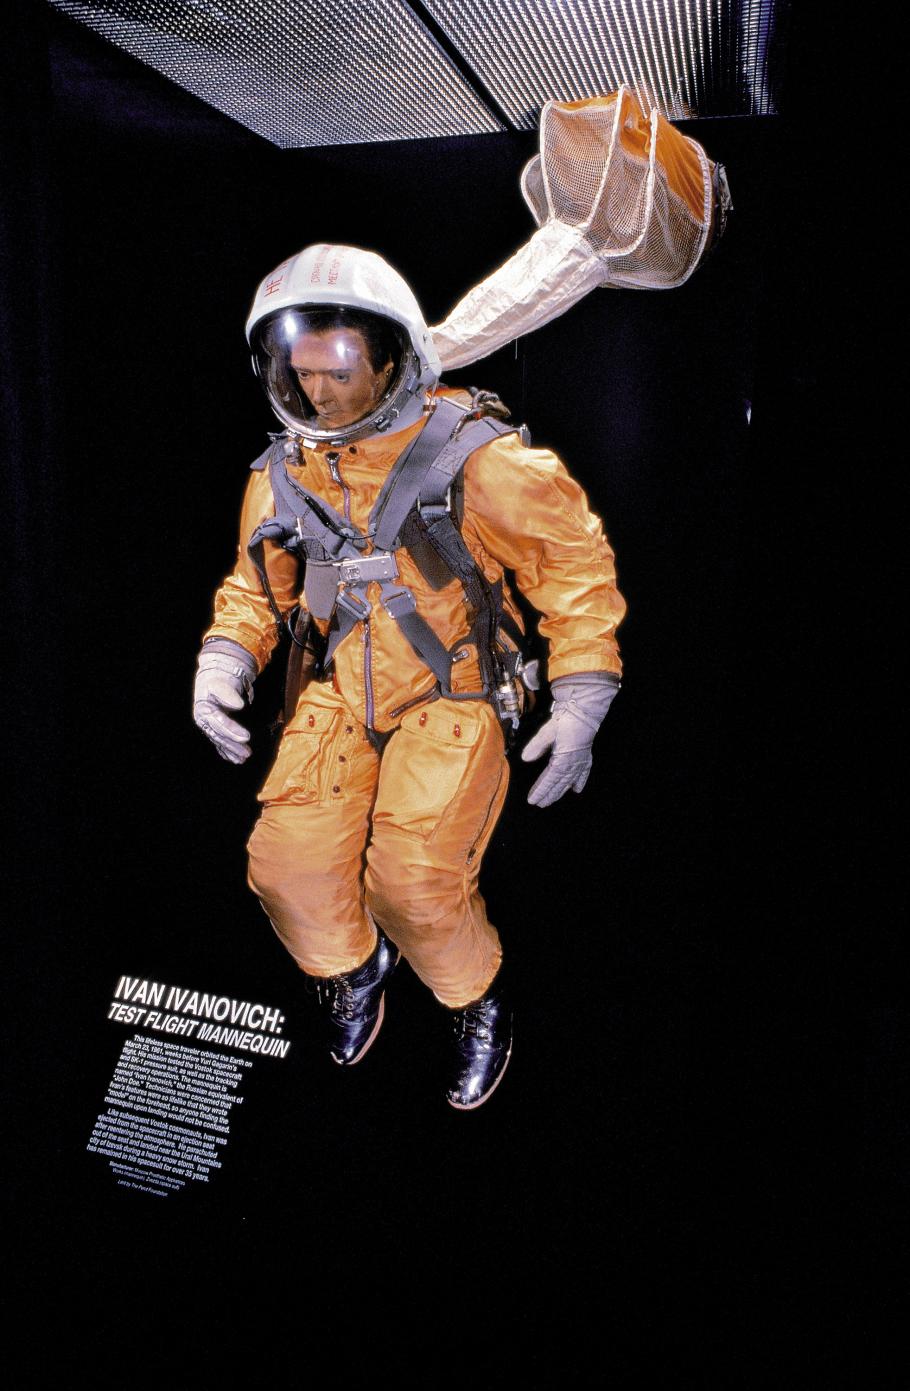 Test Flight Mannequin named "Ivan Ivanovich" in Space Race